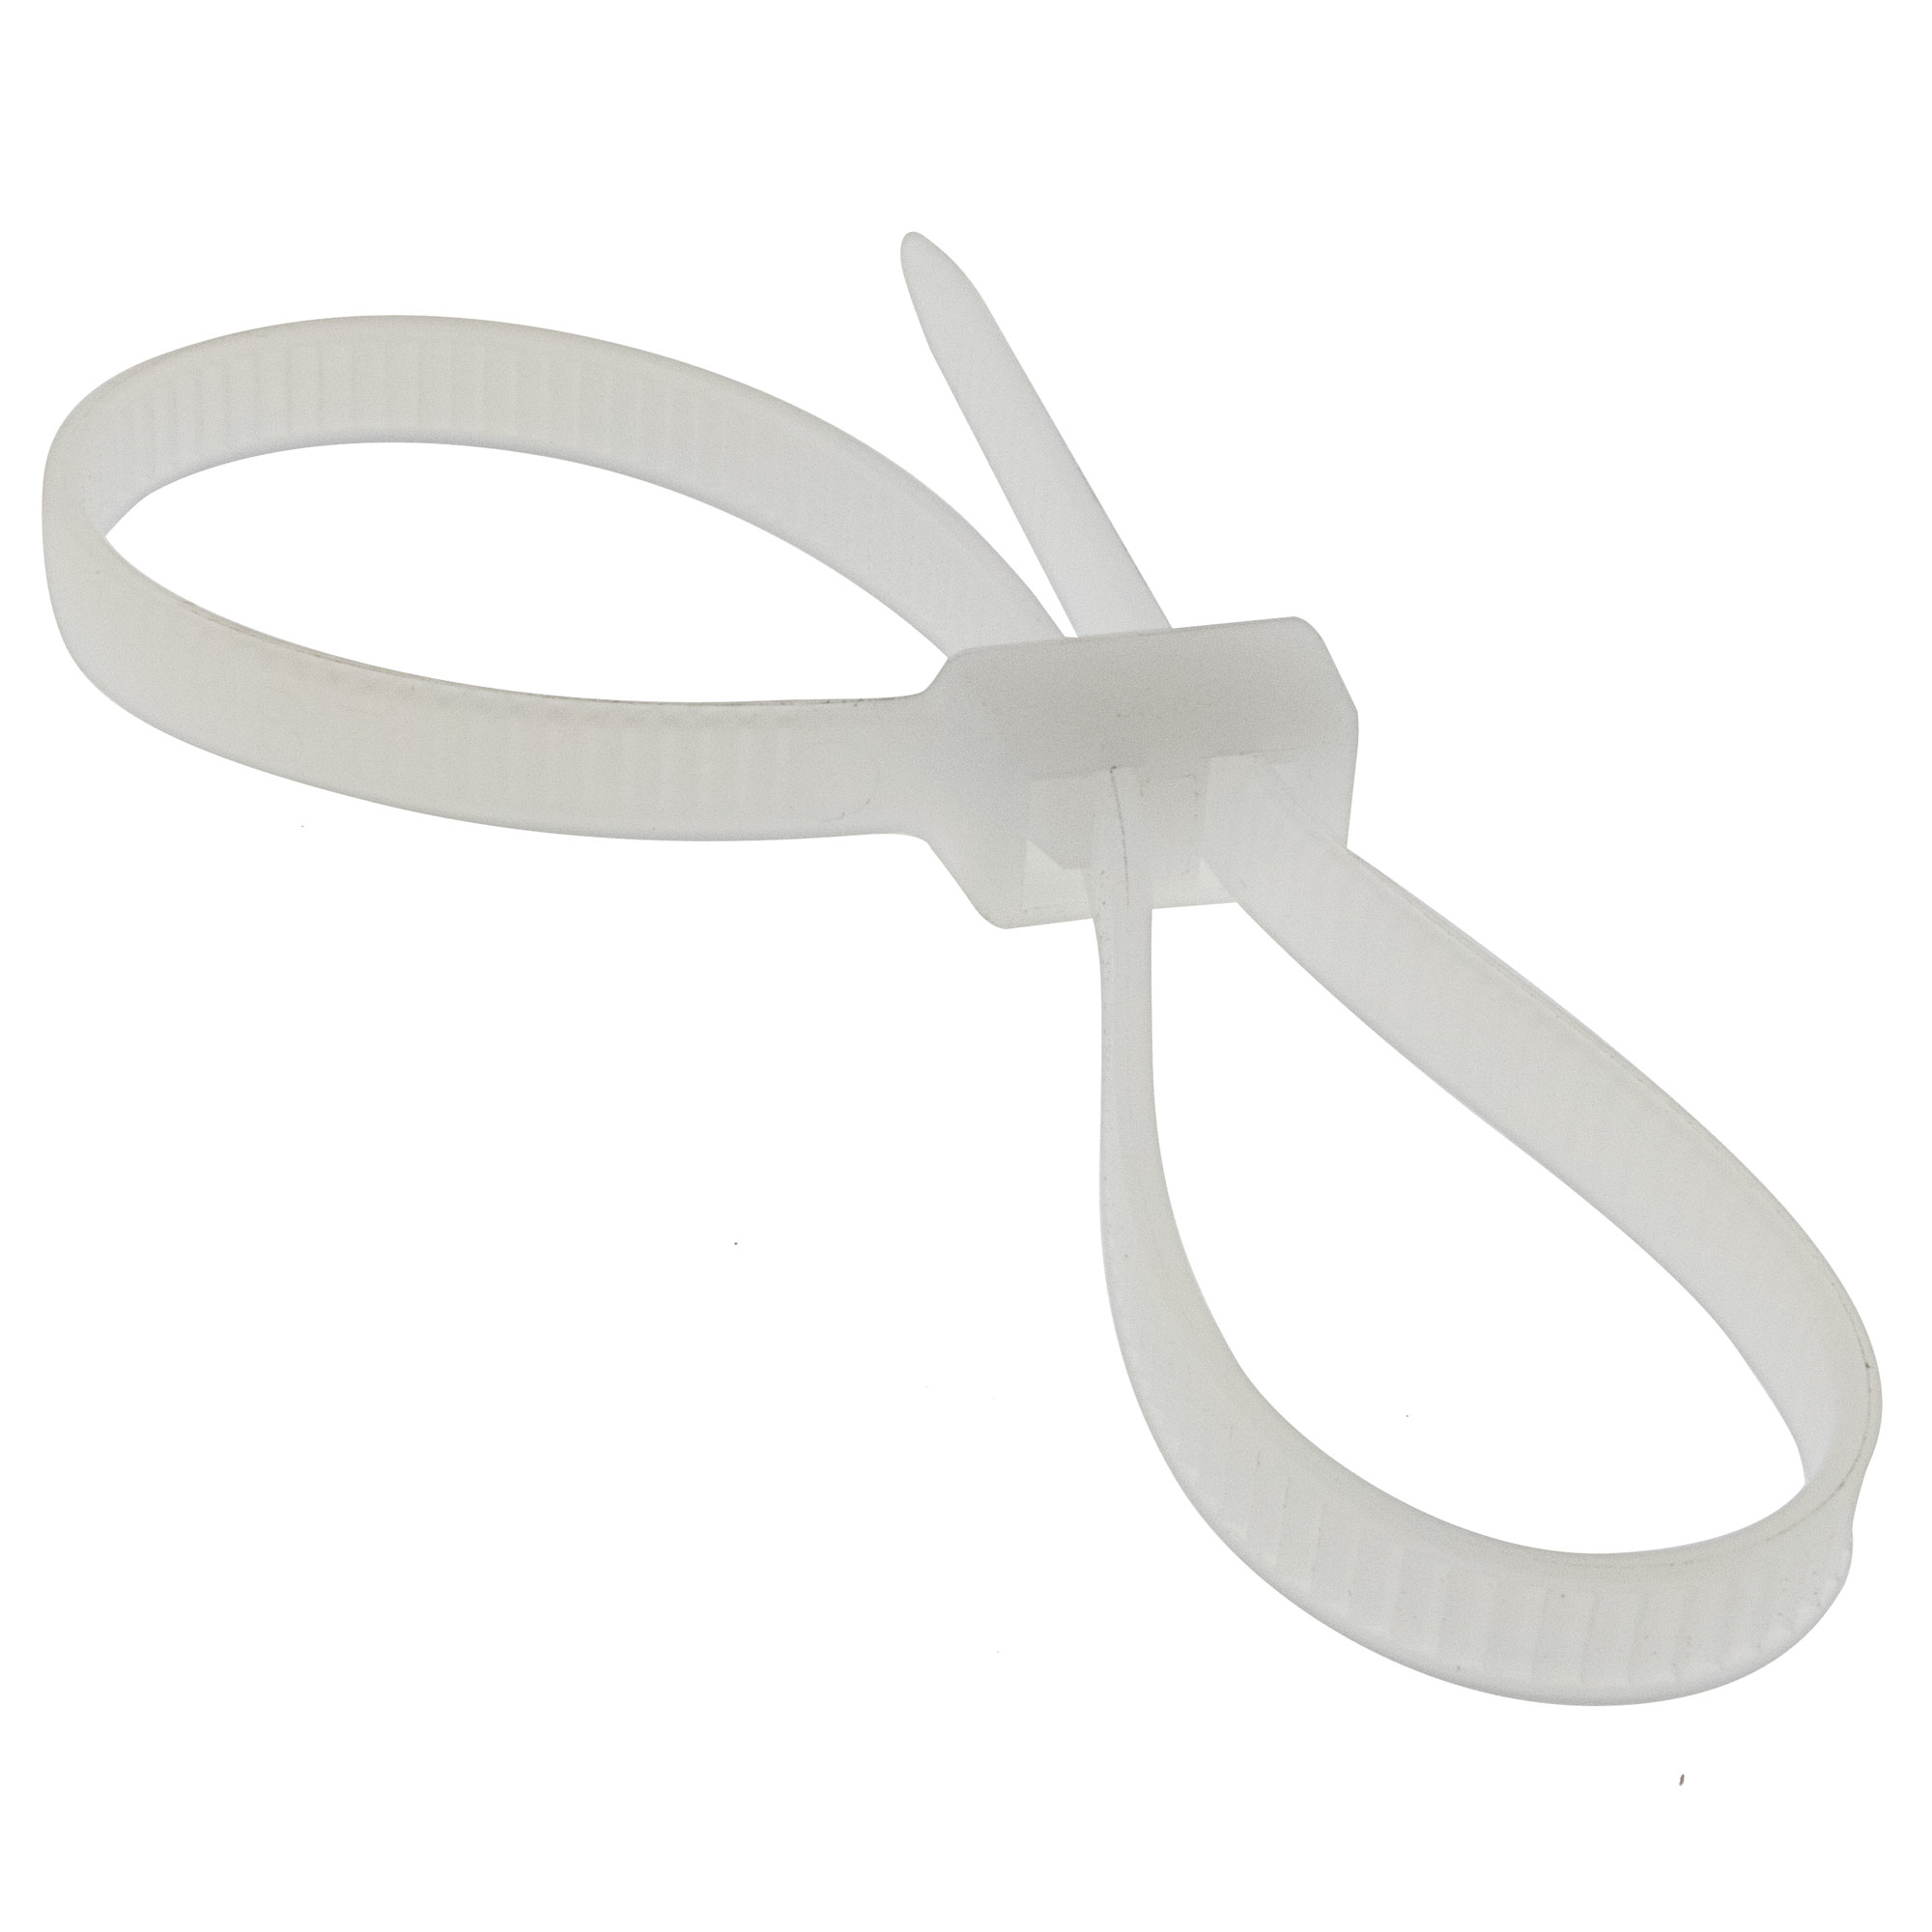 Cable tie double head 200 x 4,8mm, white, 100PCS